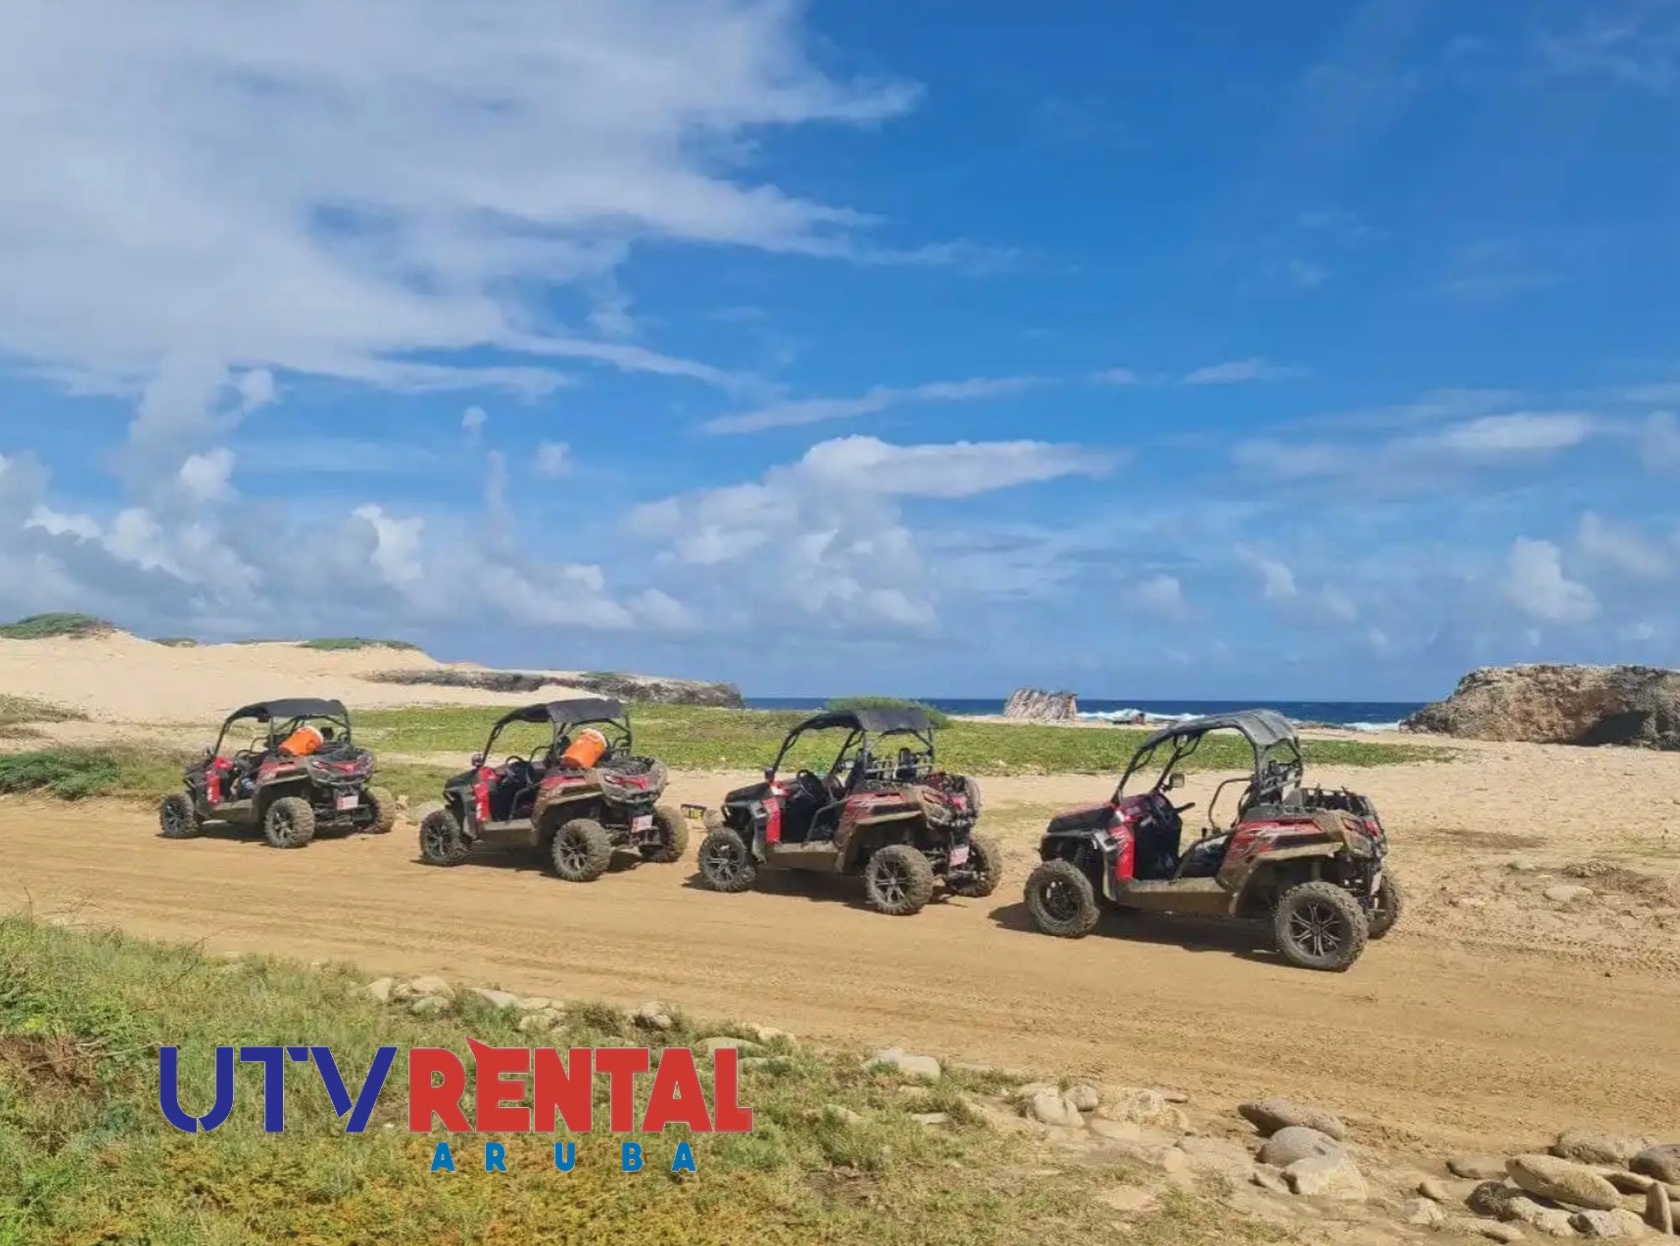  UTV RENTAL HALFDAY Aruba - Vacationstore.net